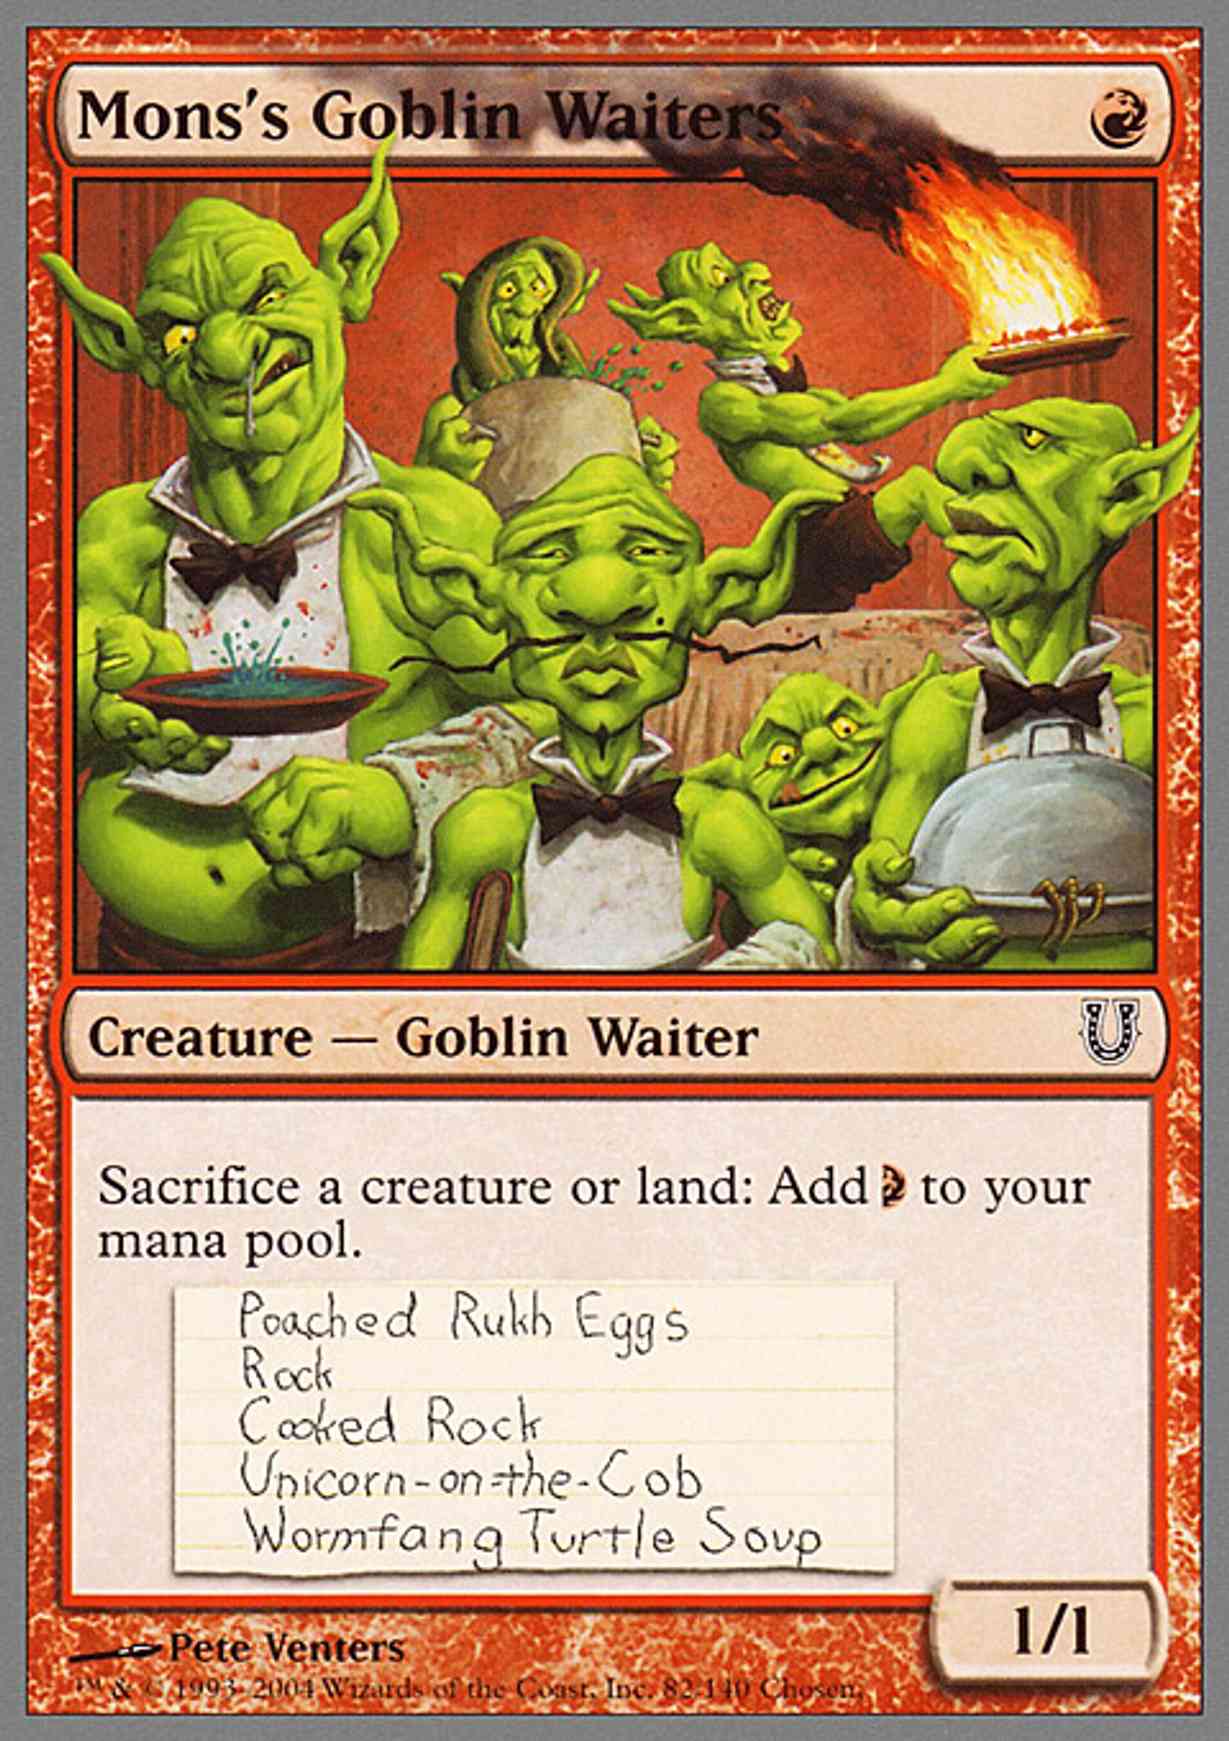 Mons's Goblin Waiters magic card front